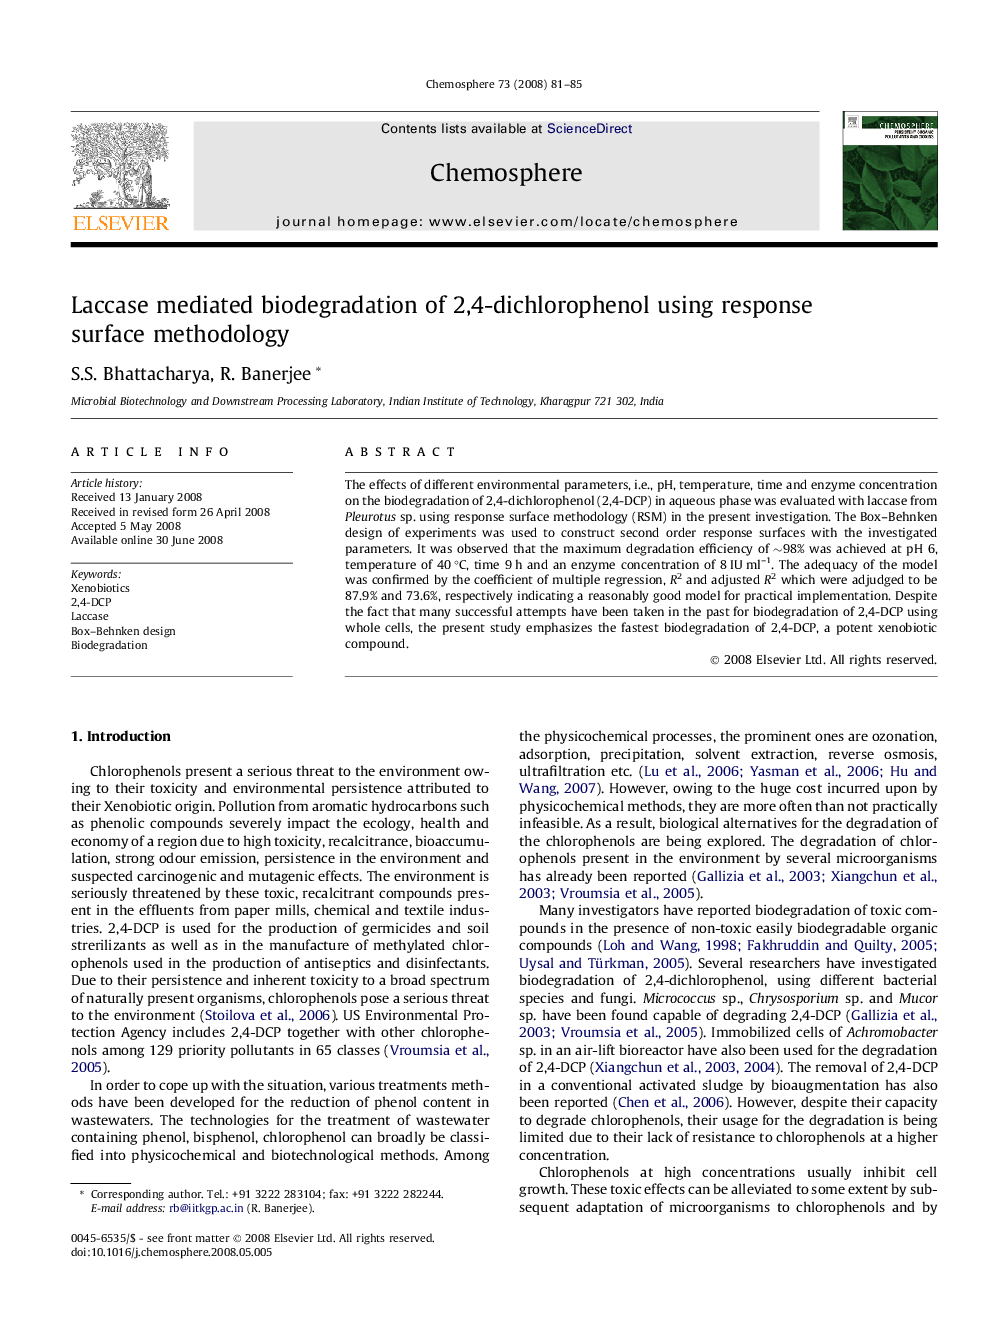 Laccase mediated biodegradation of 2,4-dichlorophenol using response surface methodology